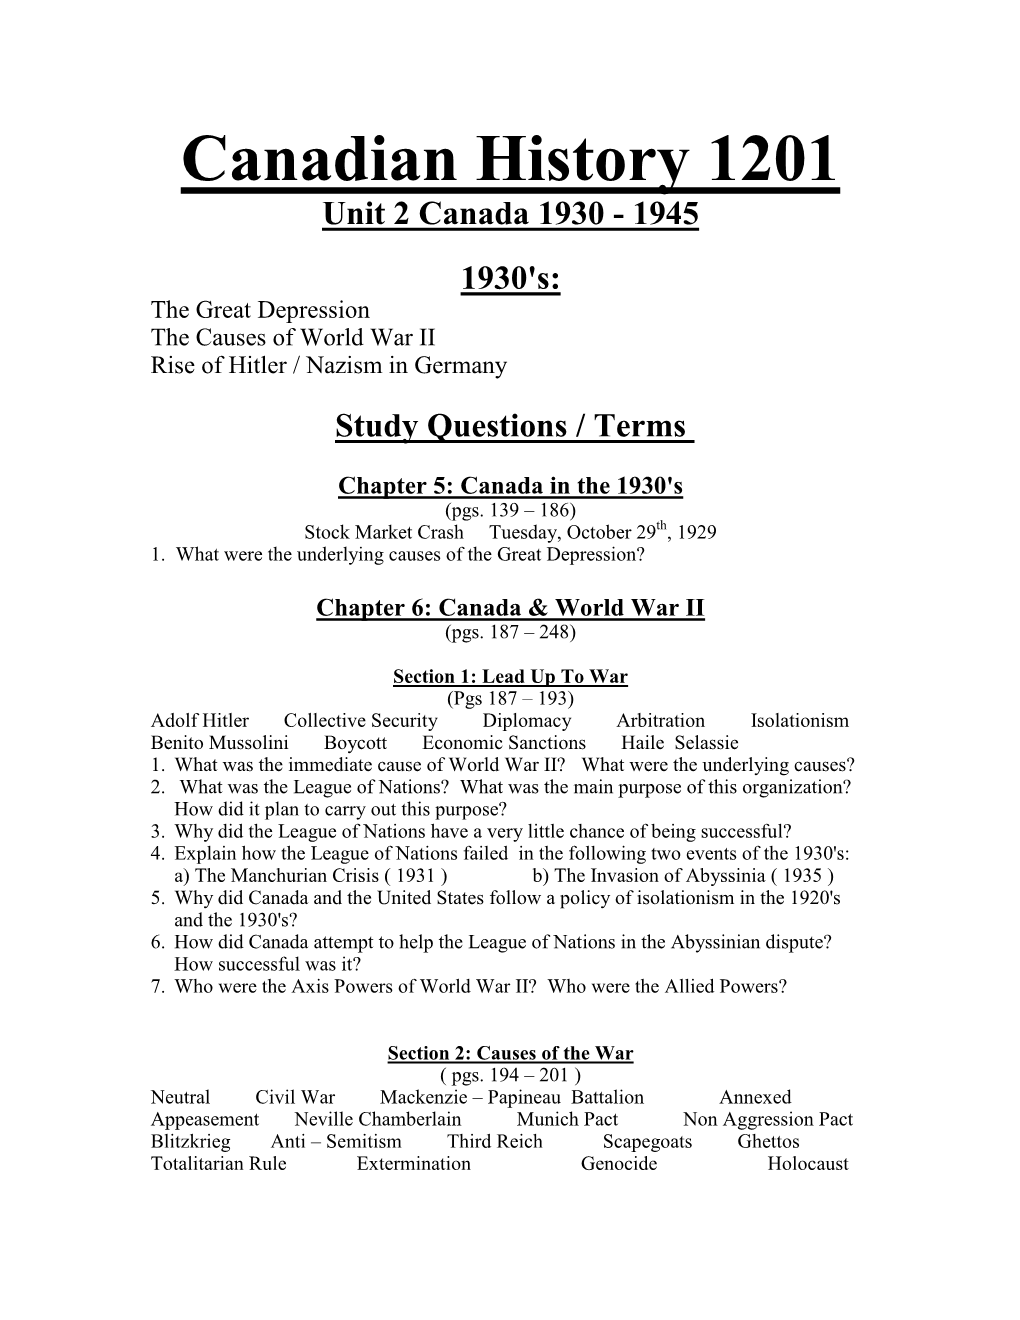 Canada & World War II